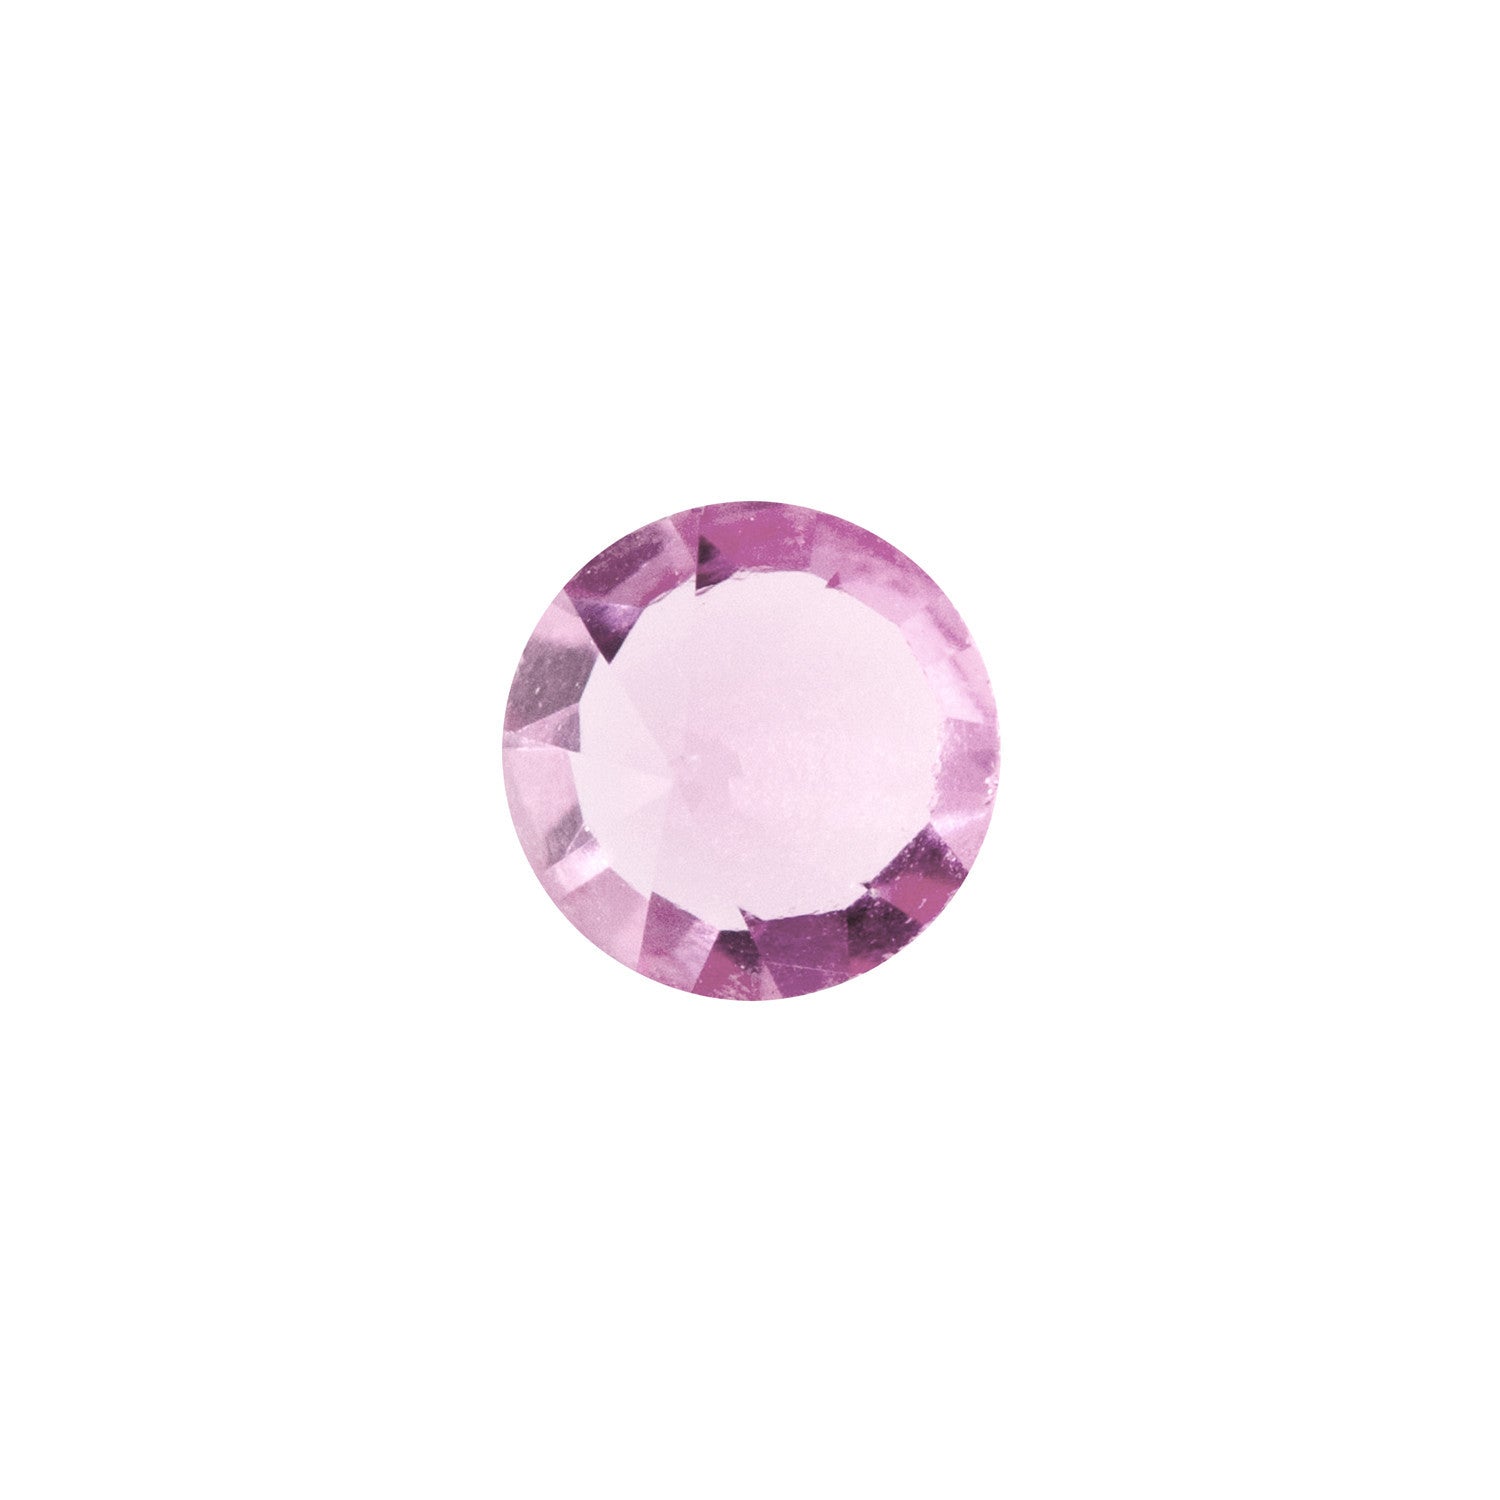 Memory Locket Charm - Birthstone Crystal (June - Alexandrite)